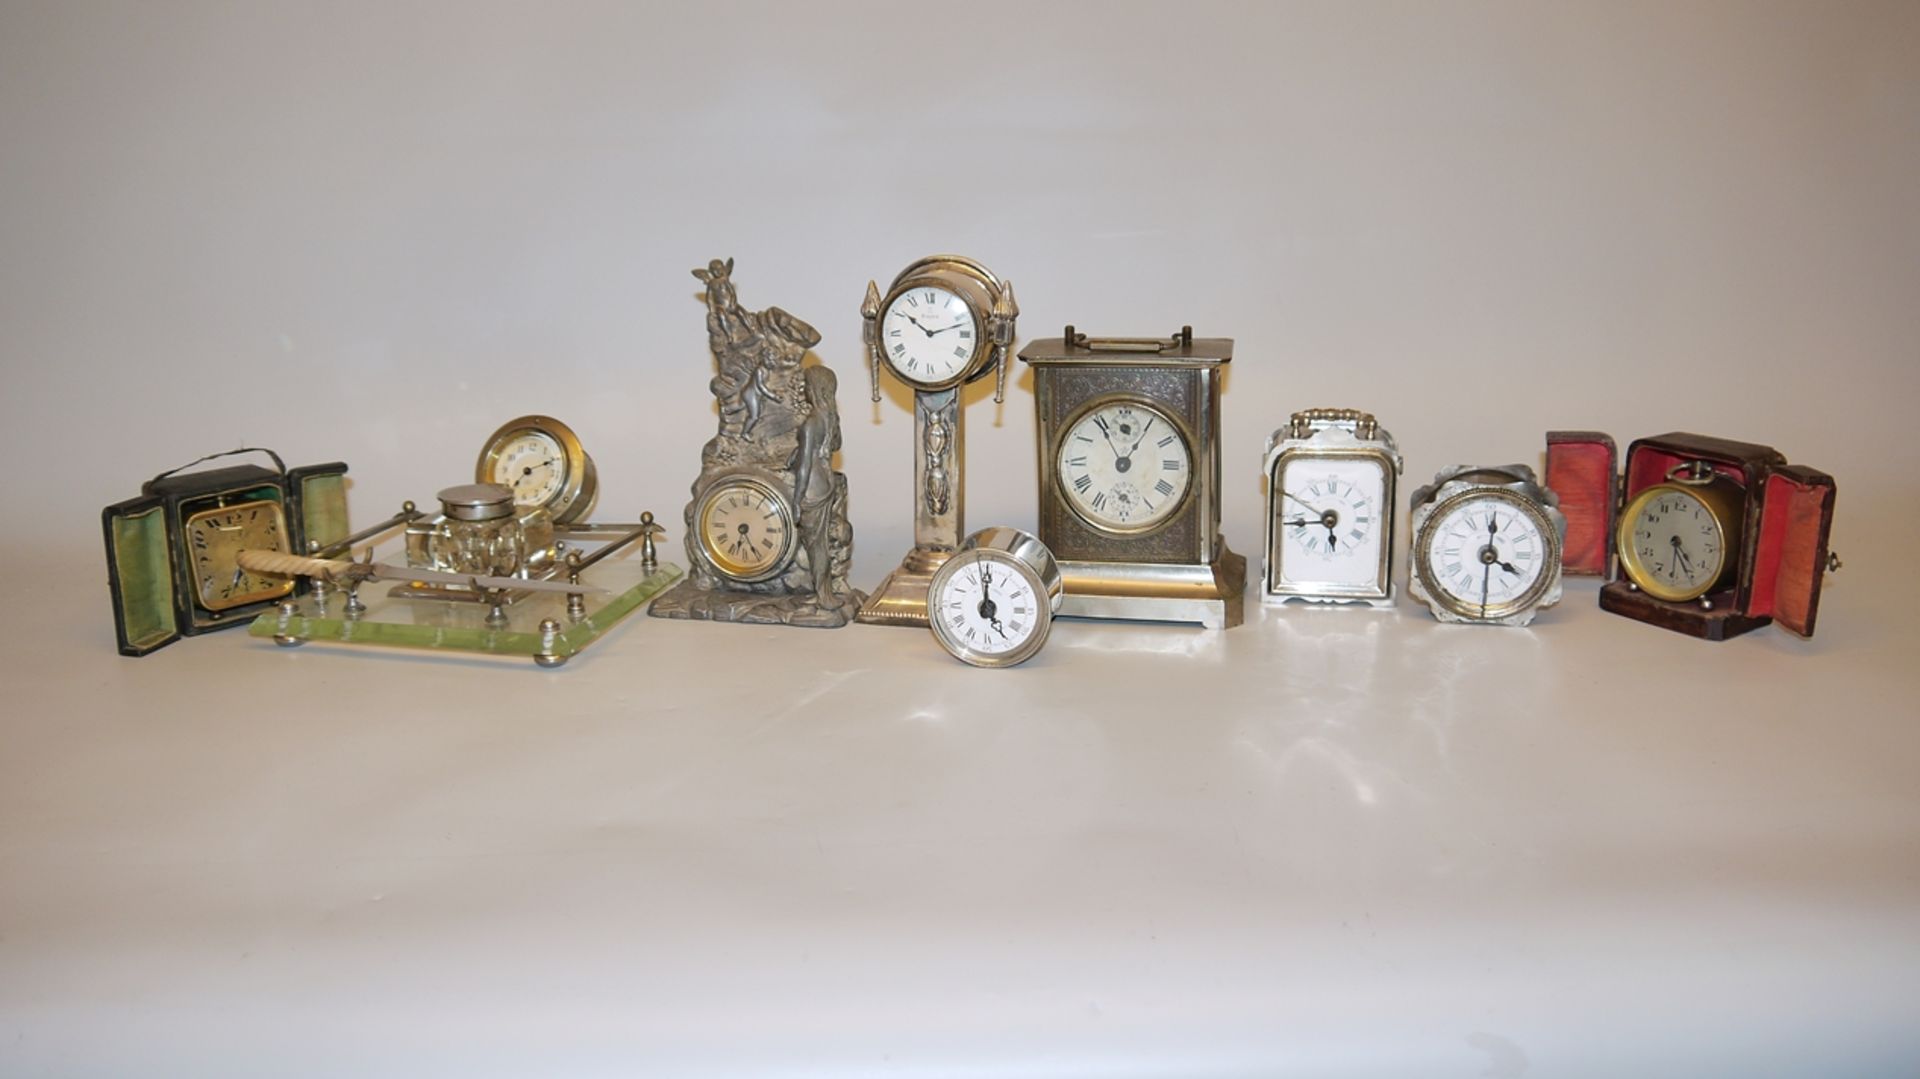 Nine table clocks and alarm clocks, circa 1900/20